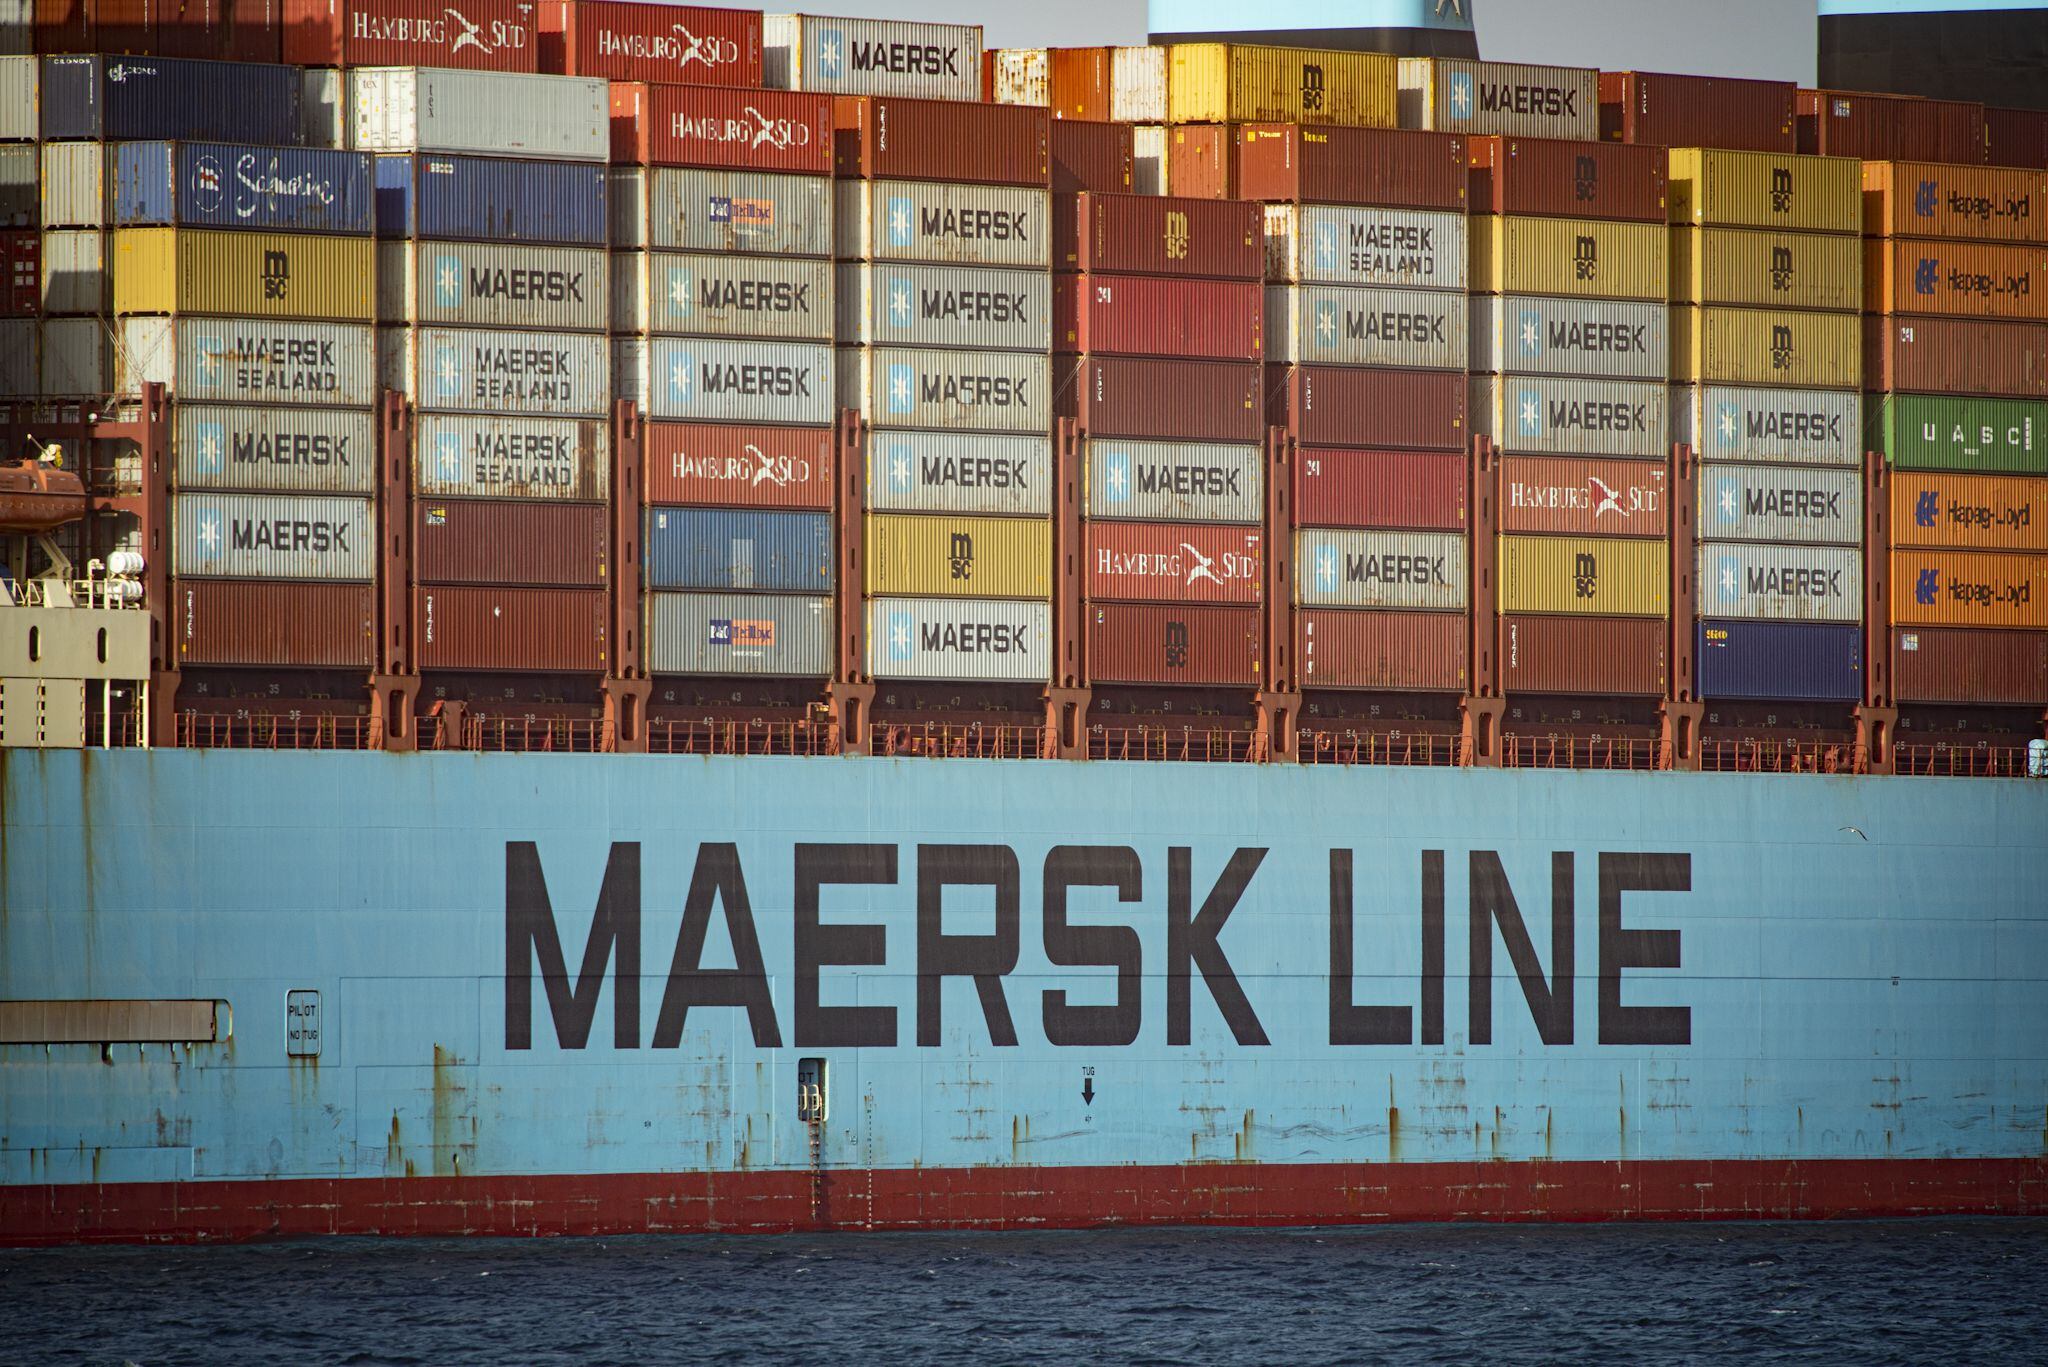 Mary Maersk el megaship Triple E de 18270 teus que llega al puerto de Algeciras proveniente del Canal de Suez (Marcos Morenos/ Europa Press)
